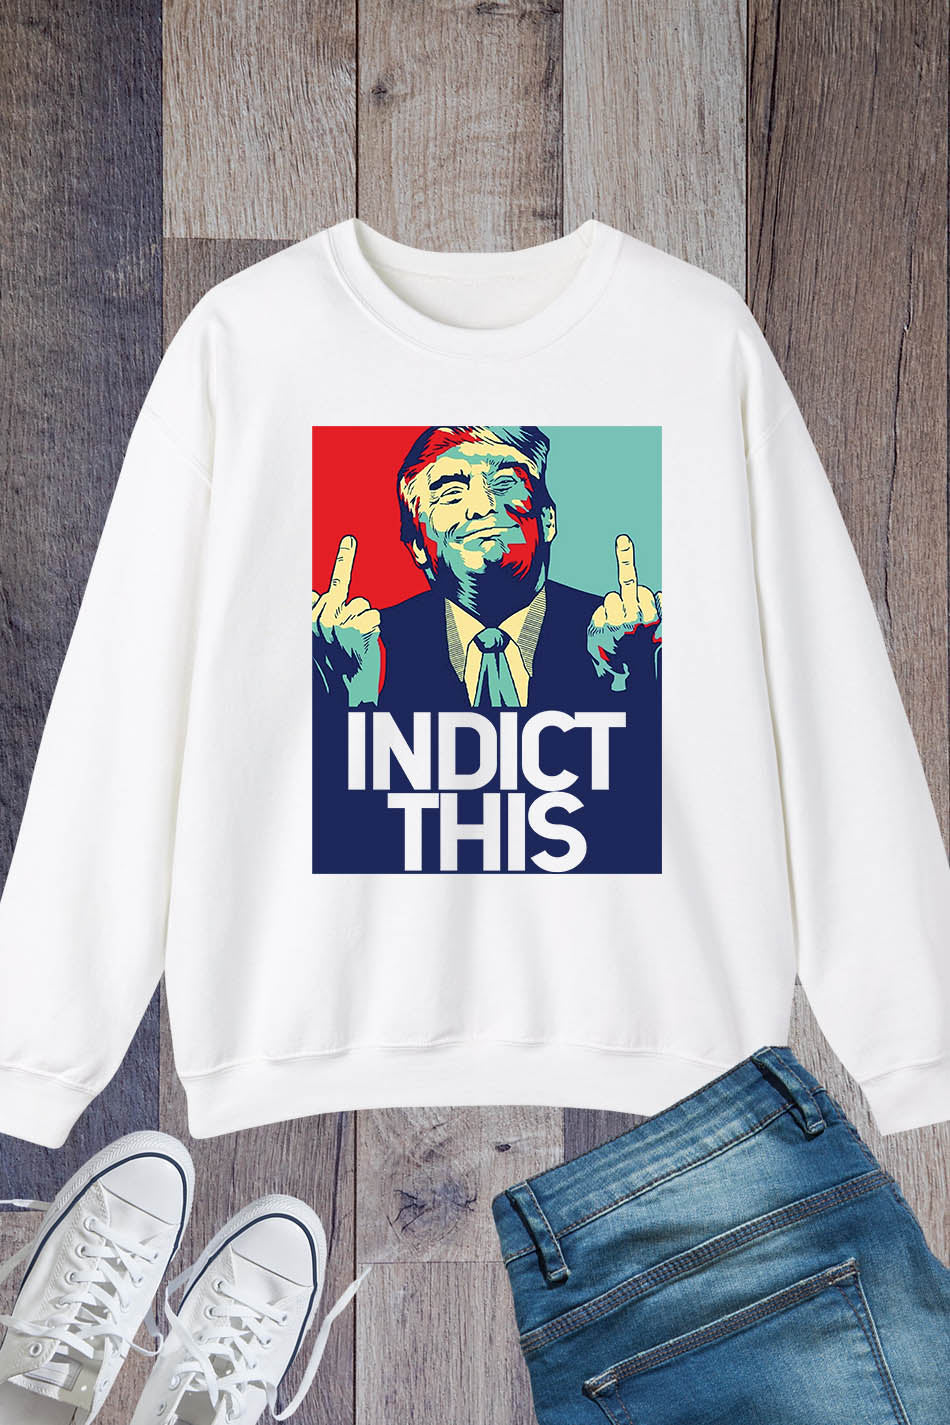 Indict This Donald Trump  Sweatshirt